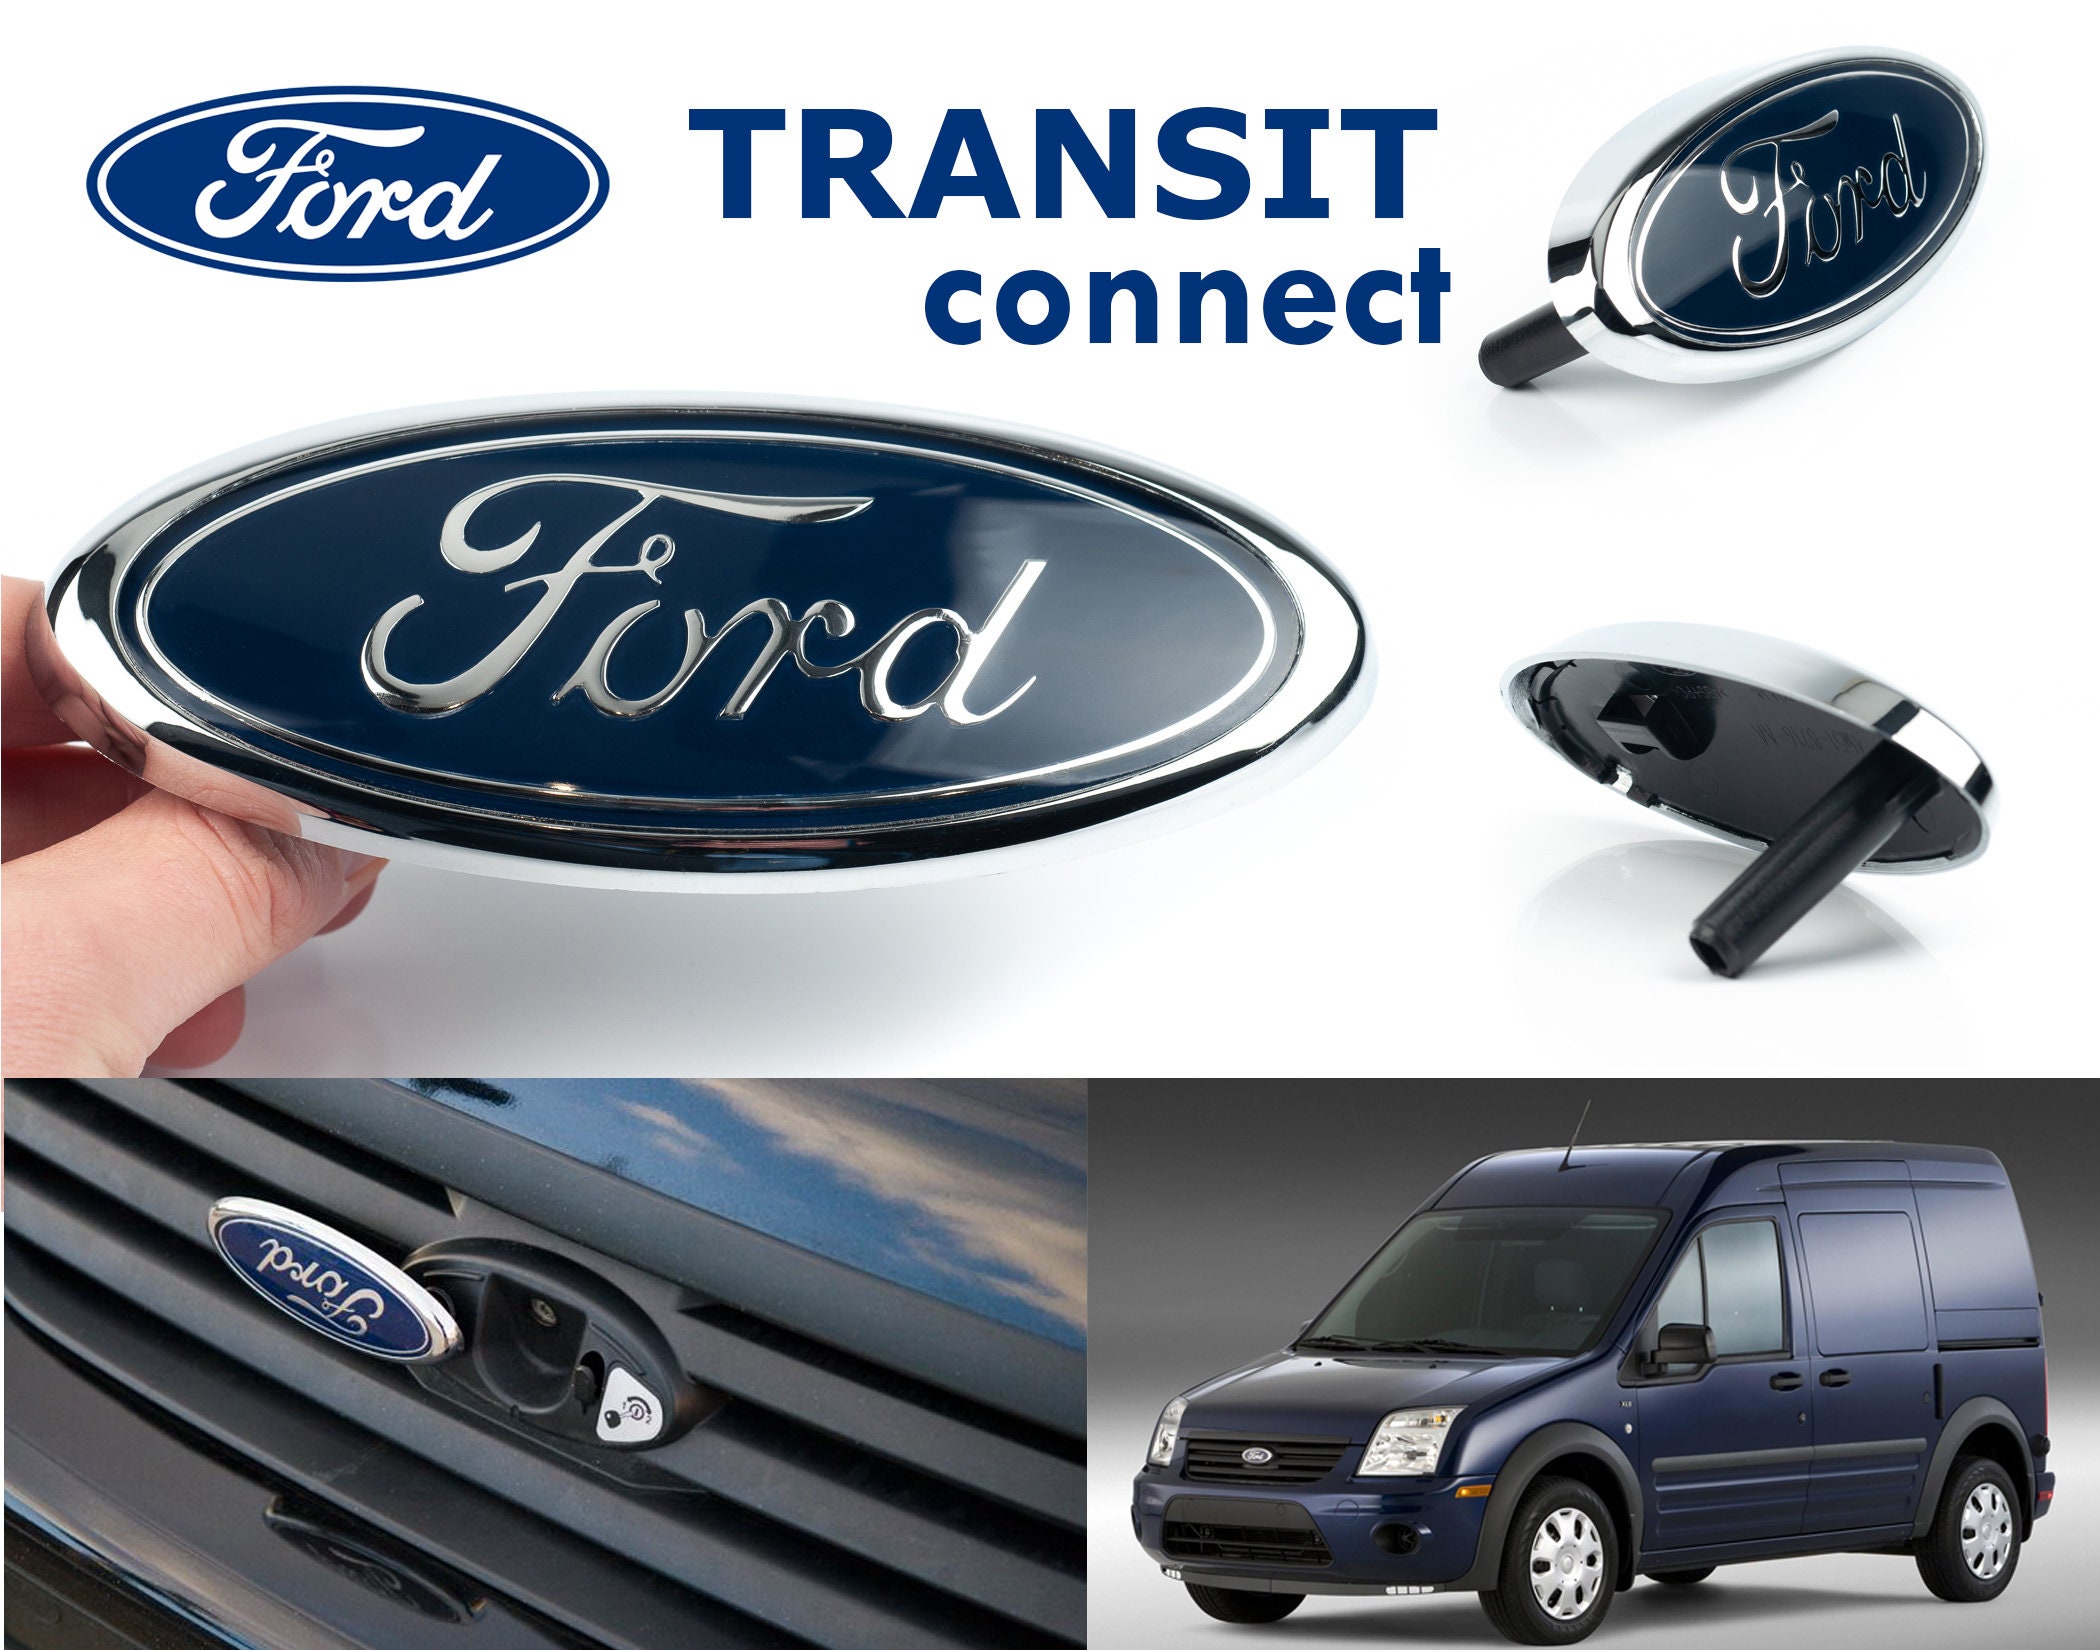 Ford Transit Connect -  Sweden